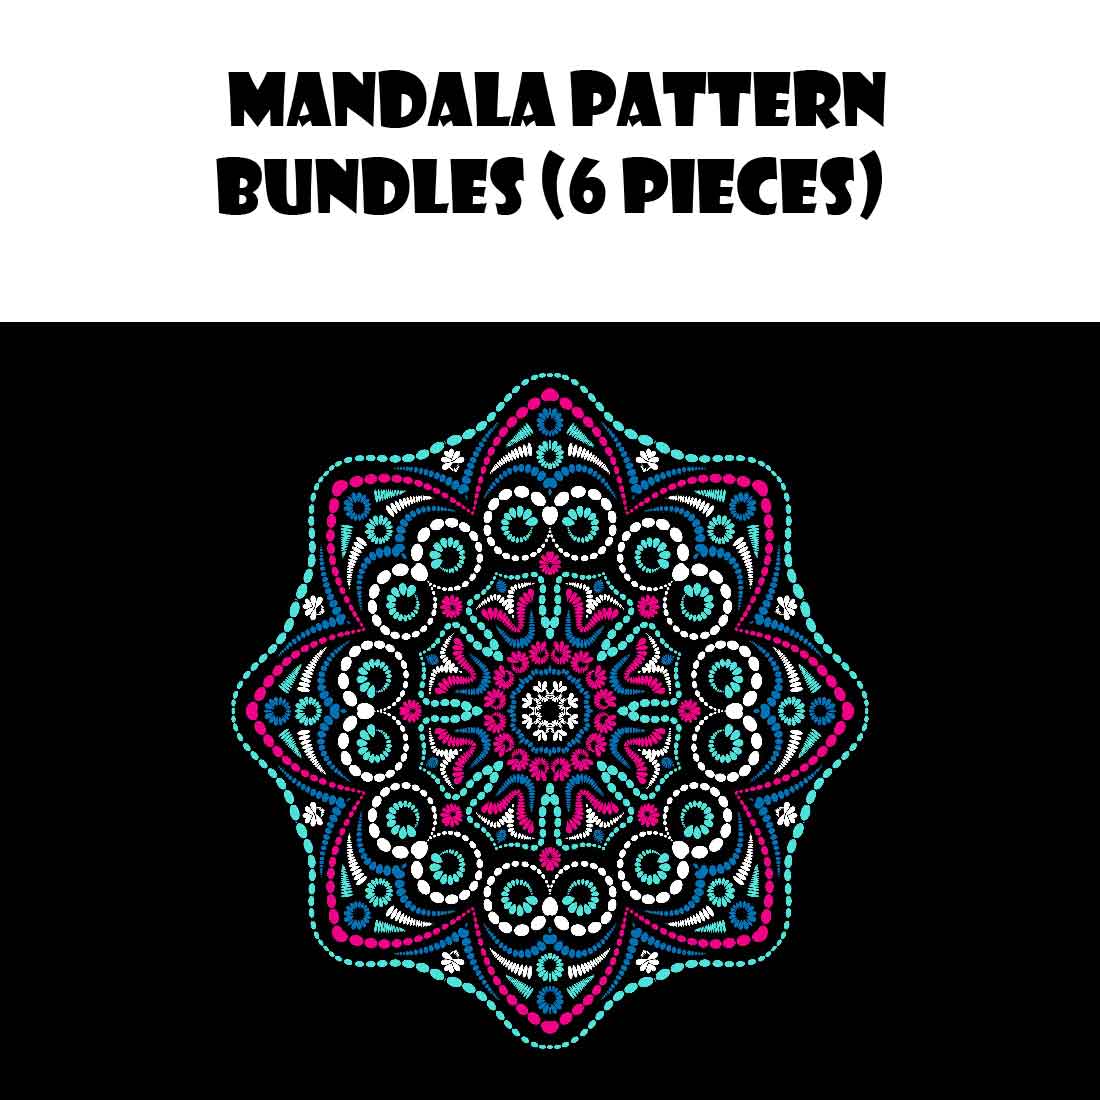 Charming image of geometric mandala